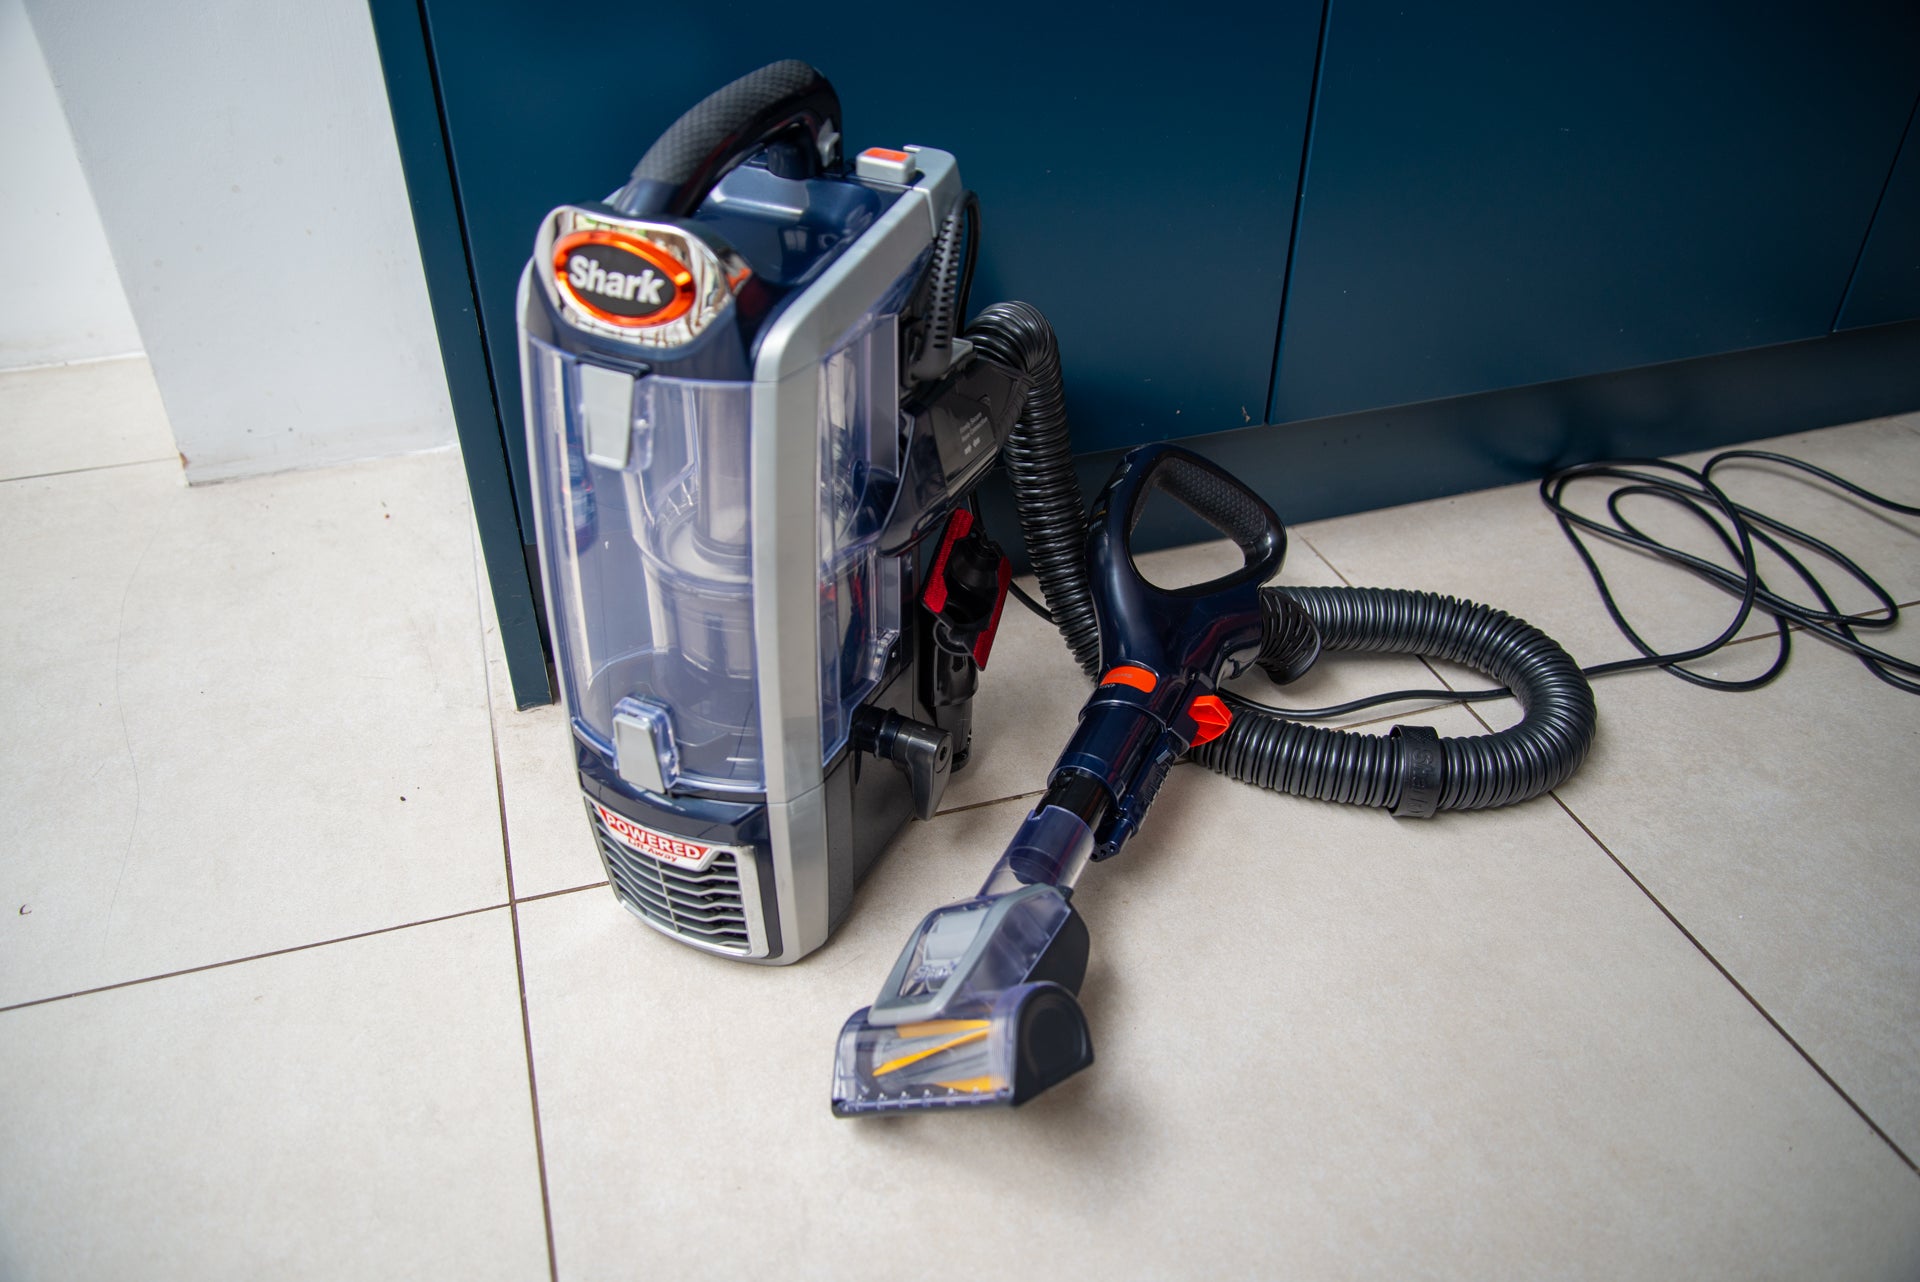 Shark Anti Hair Wrap Upright Vacuum Cleaner with Powered Lift-Away and TruePet NZ801UKT Lift-Away mode